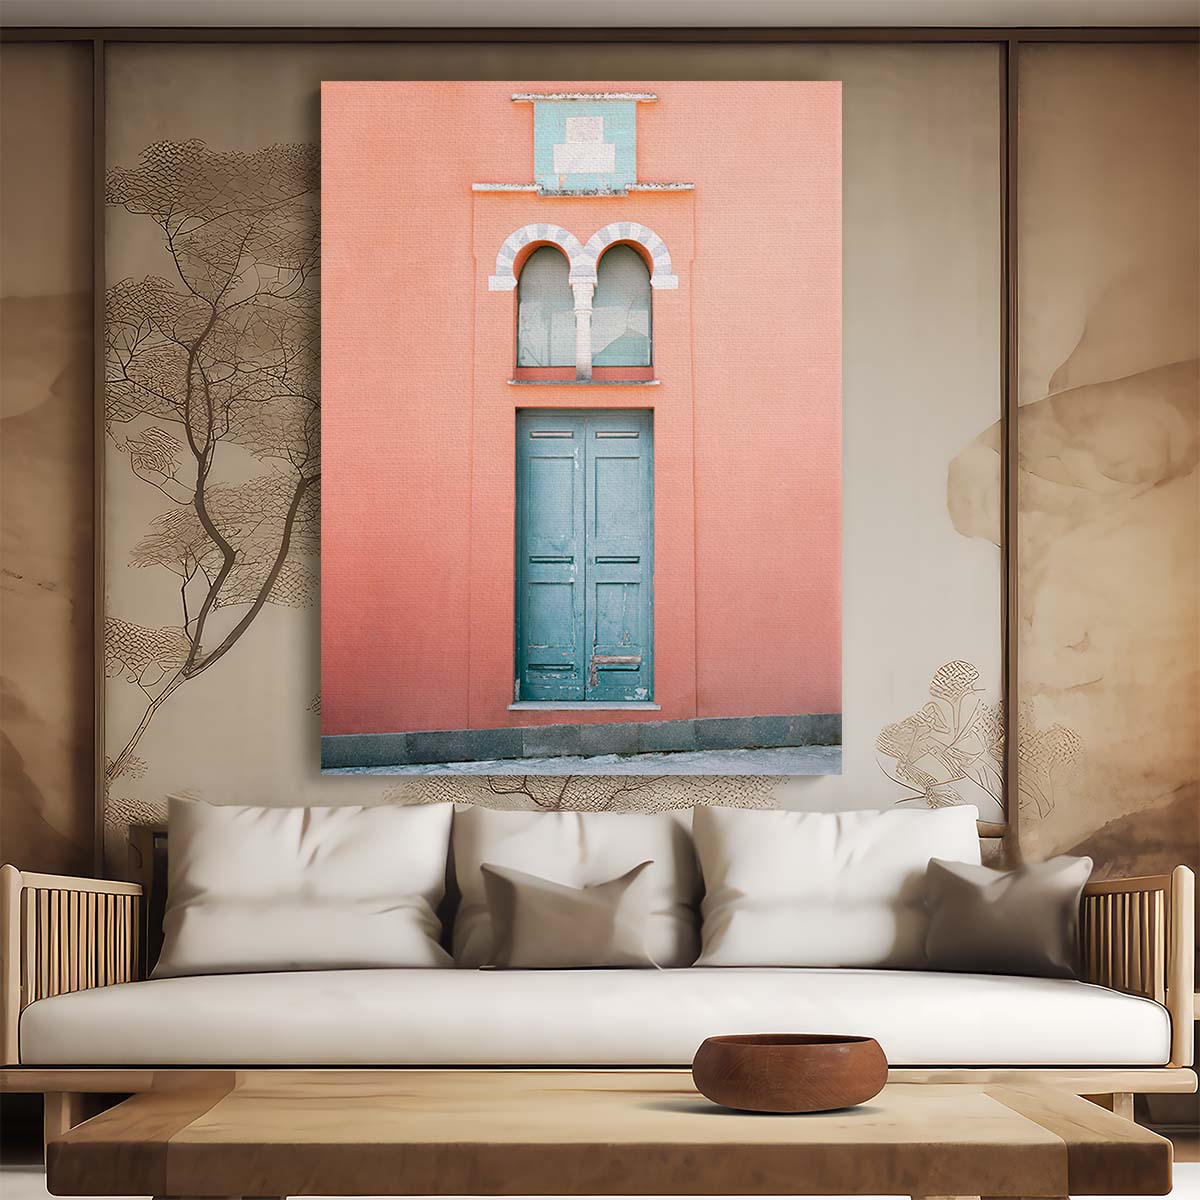 Capri Door Italy Pastel Photography Art by Raisa Zwart by Luxuriance Designs, made in USA